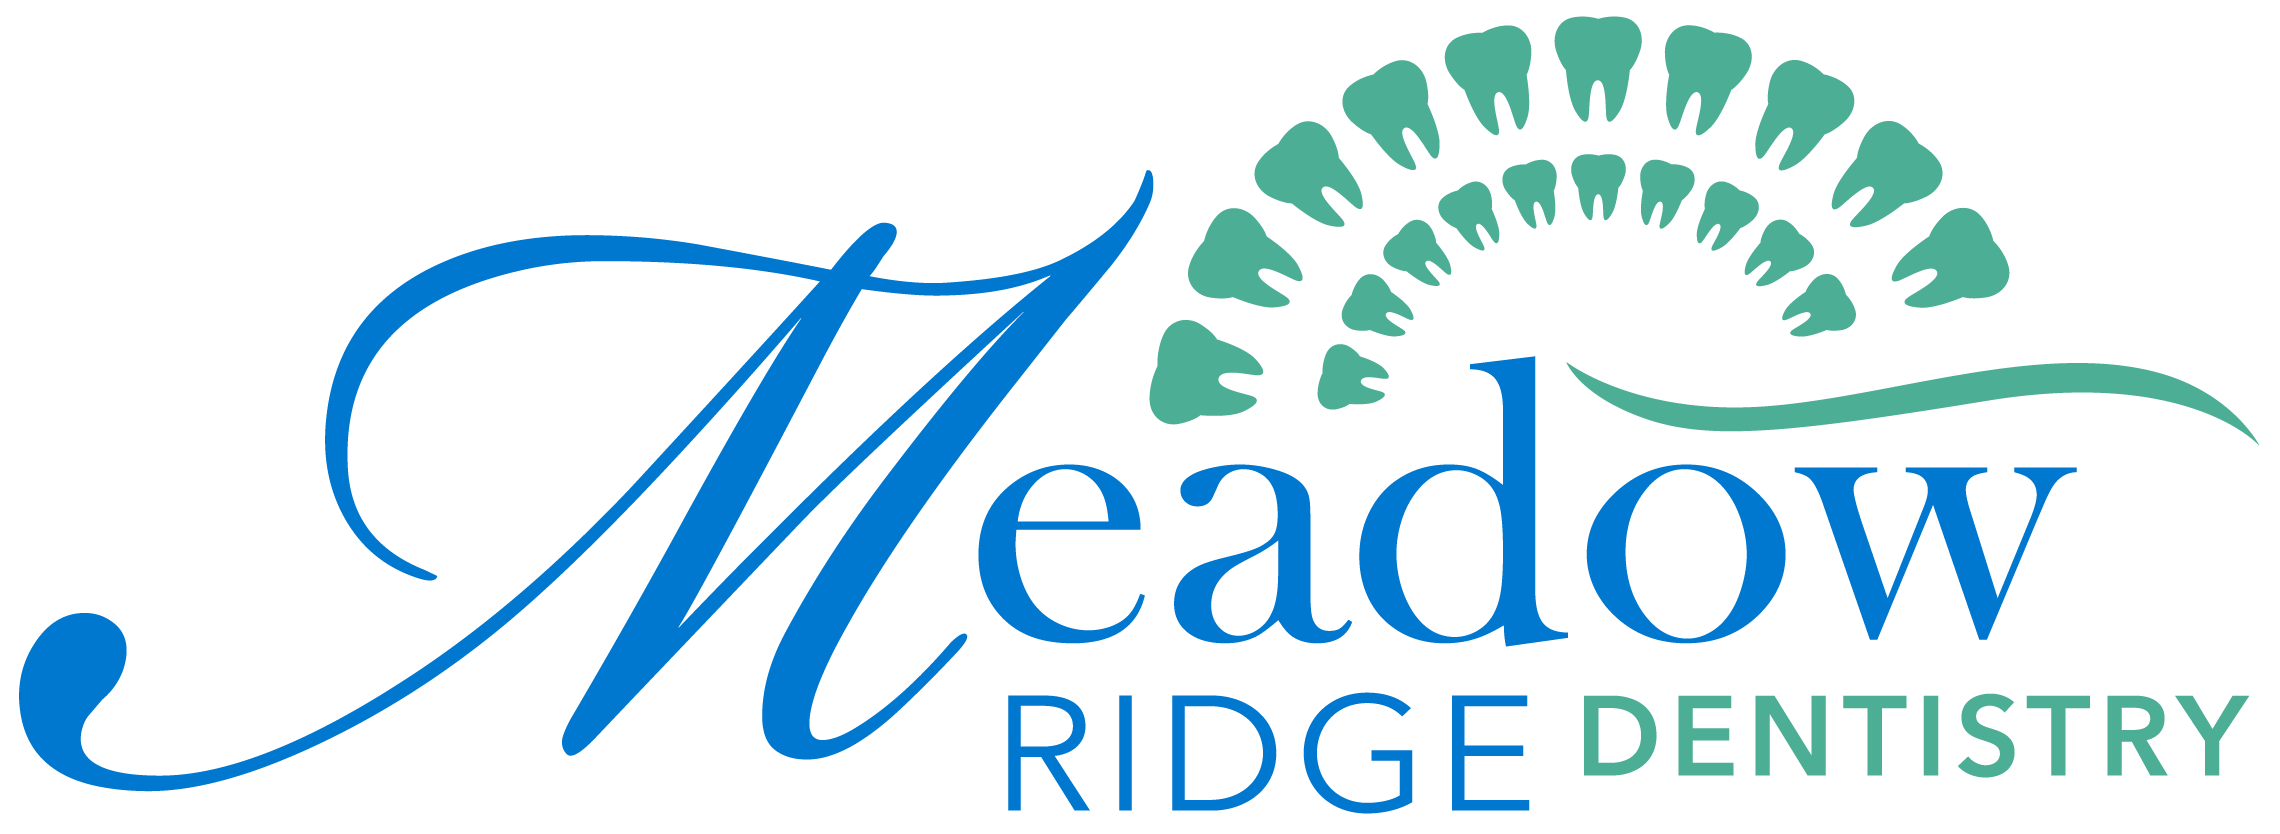 Meadow Ridge Dentistry logo